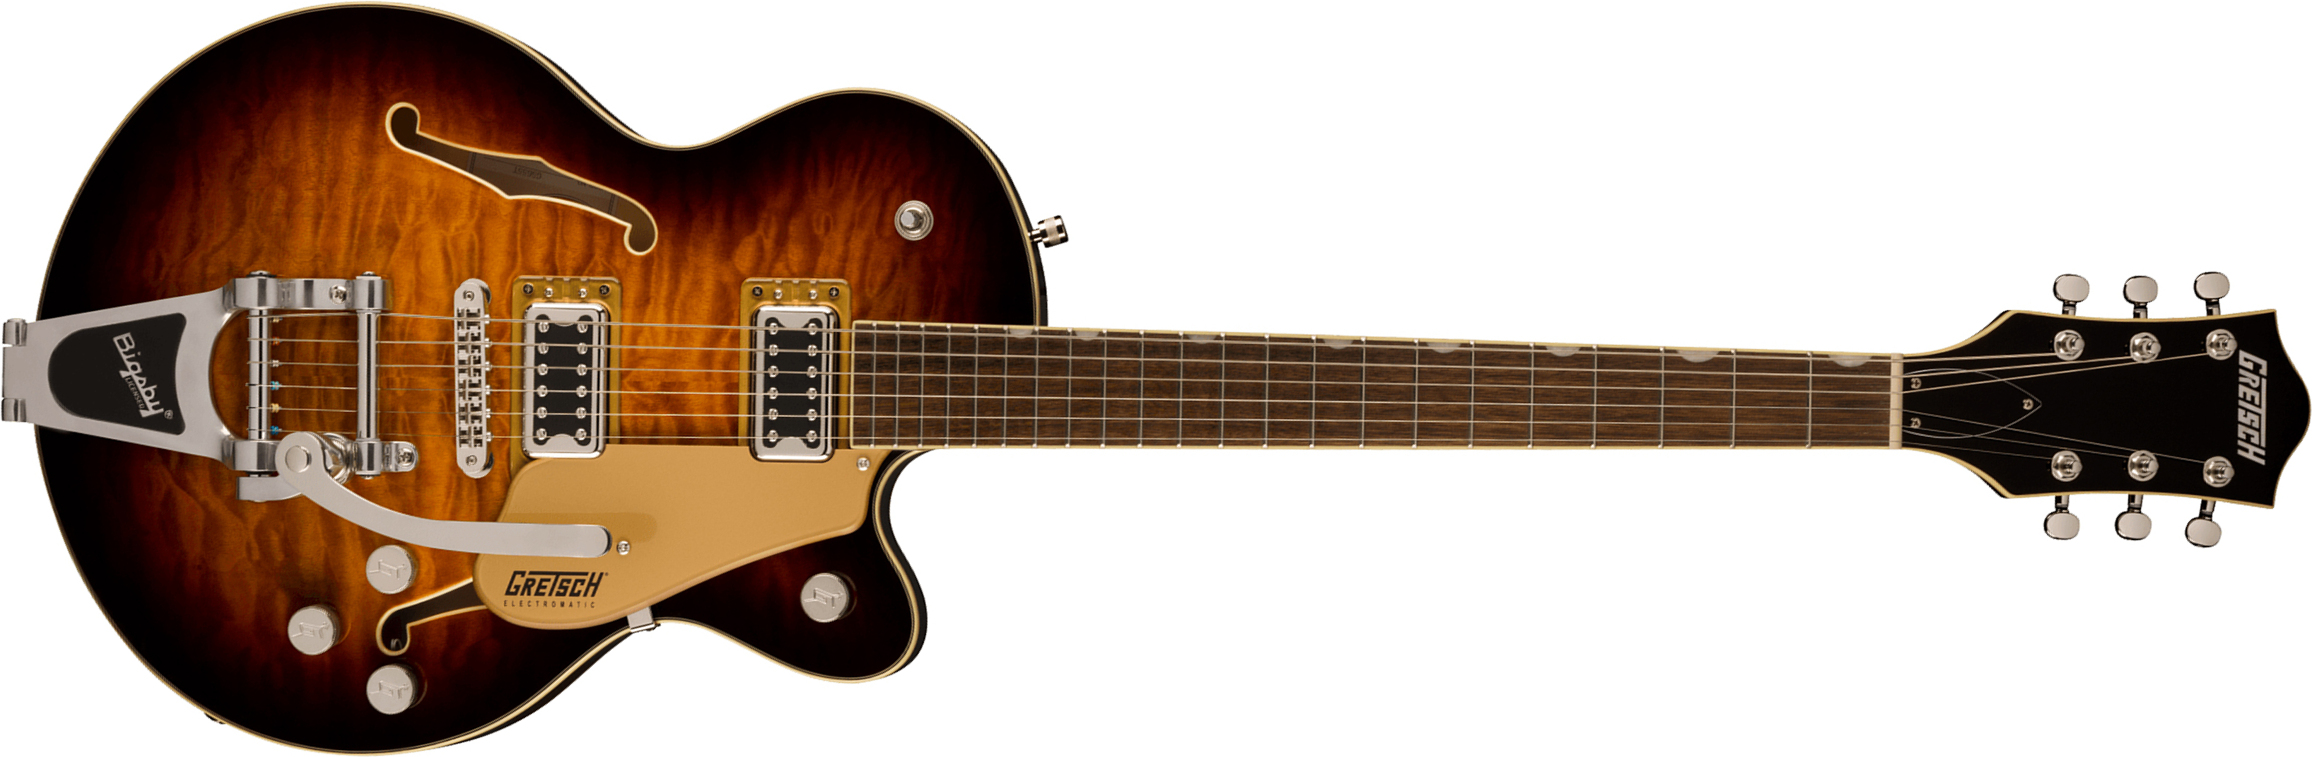 Gretsch G5655t-qm Electromatic Center Block Jr. Bigsby 2h Trem Lau - Sweet Tea - Semi-hollow electric guitar - Main picture